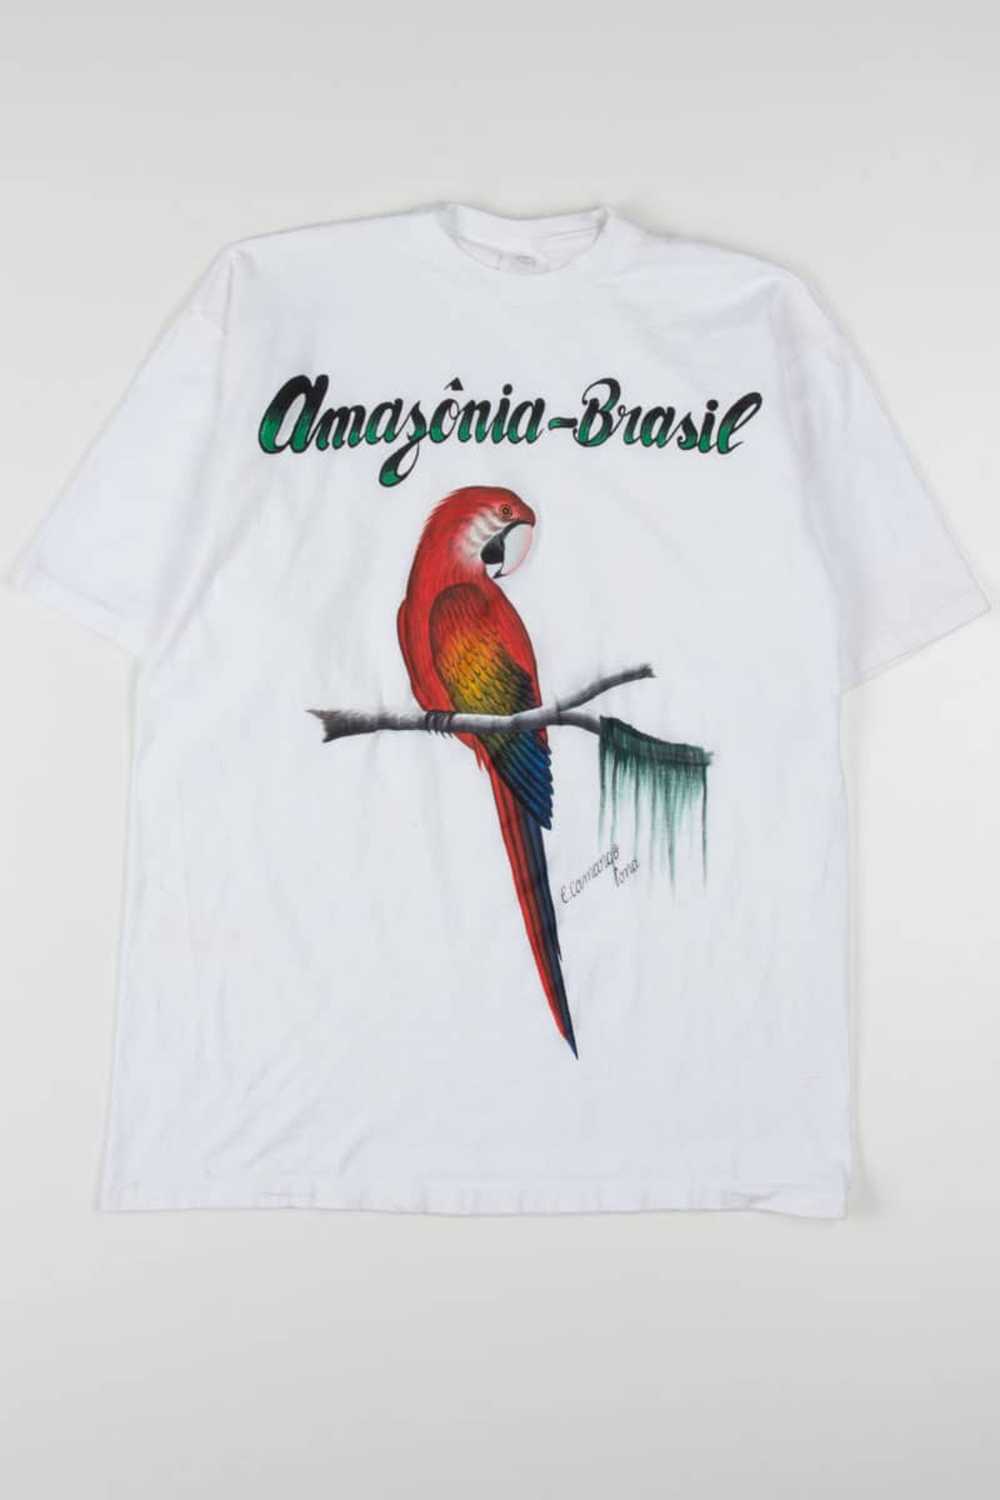 Amazonia-Brasil Painted Parrot Souvenir T-Shirt - image 2